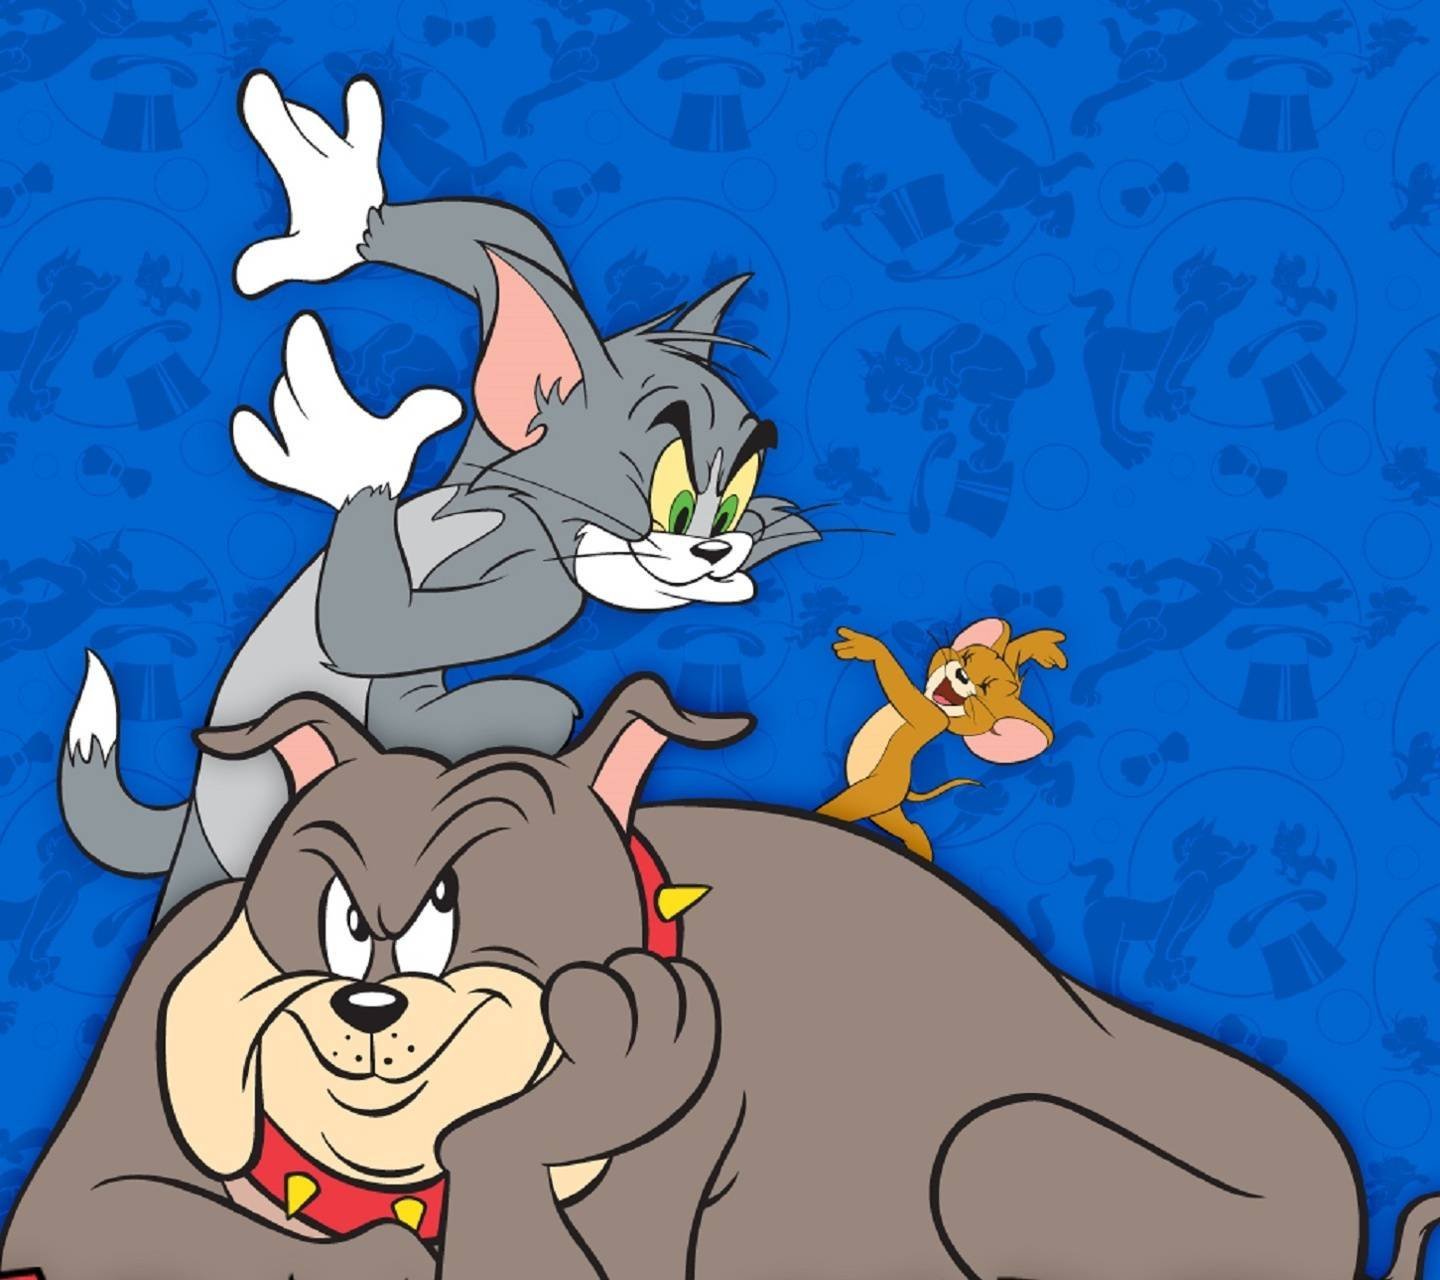 Jerry том и джерри. Том и Джерри Tom and Jerry. Герои мультика том и Джерри. Том и Джерри Дисней.